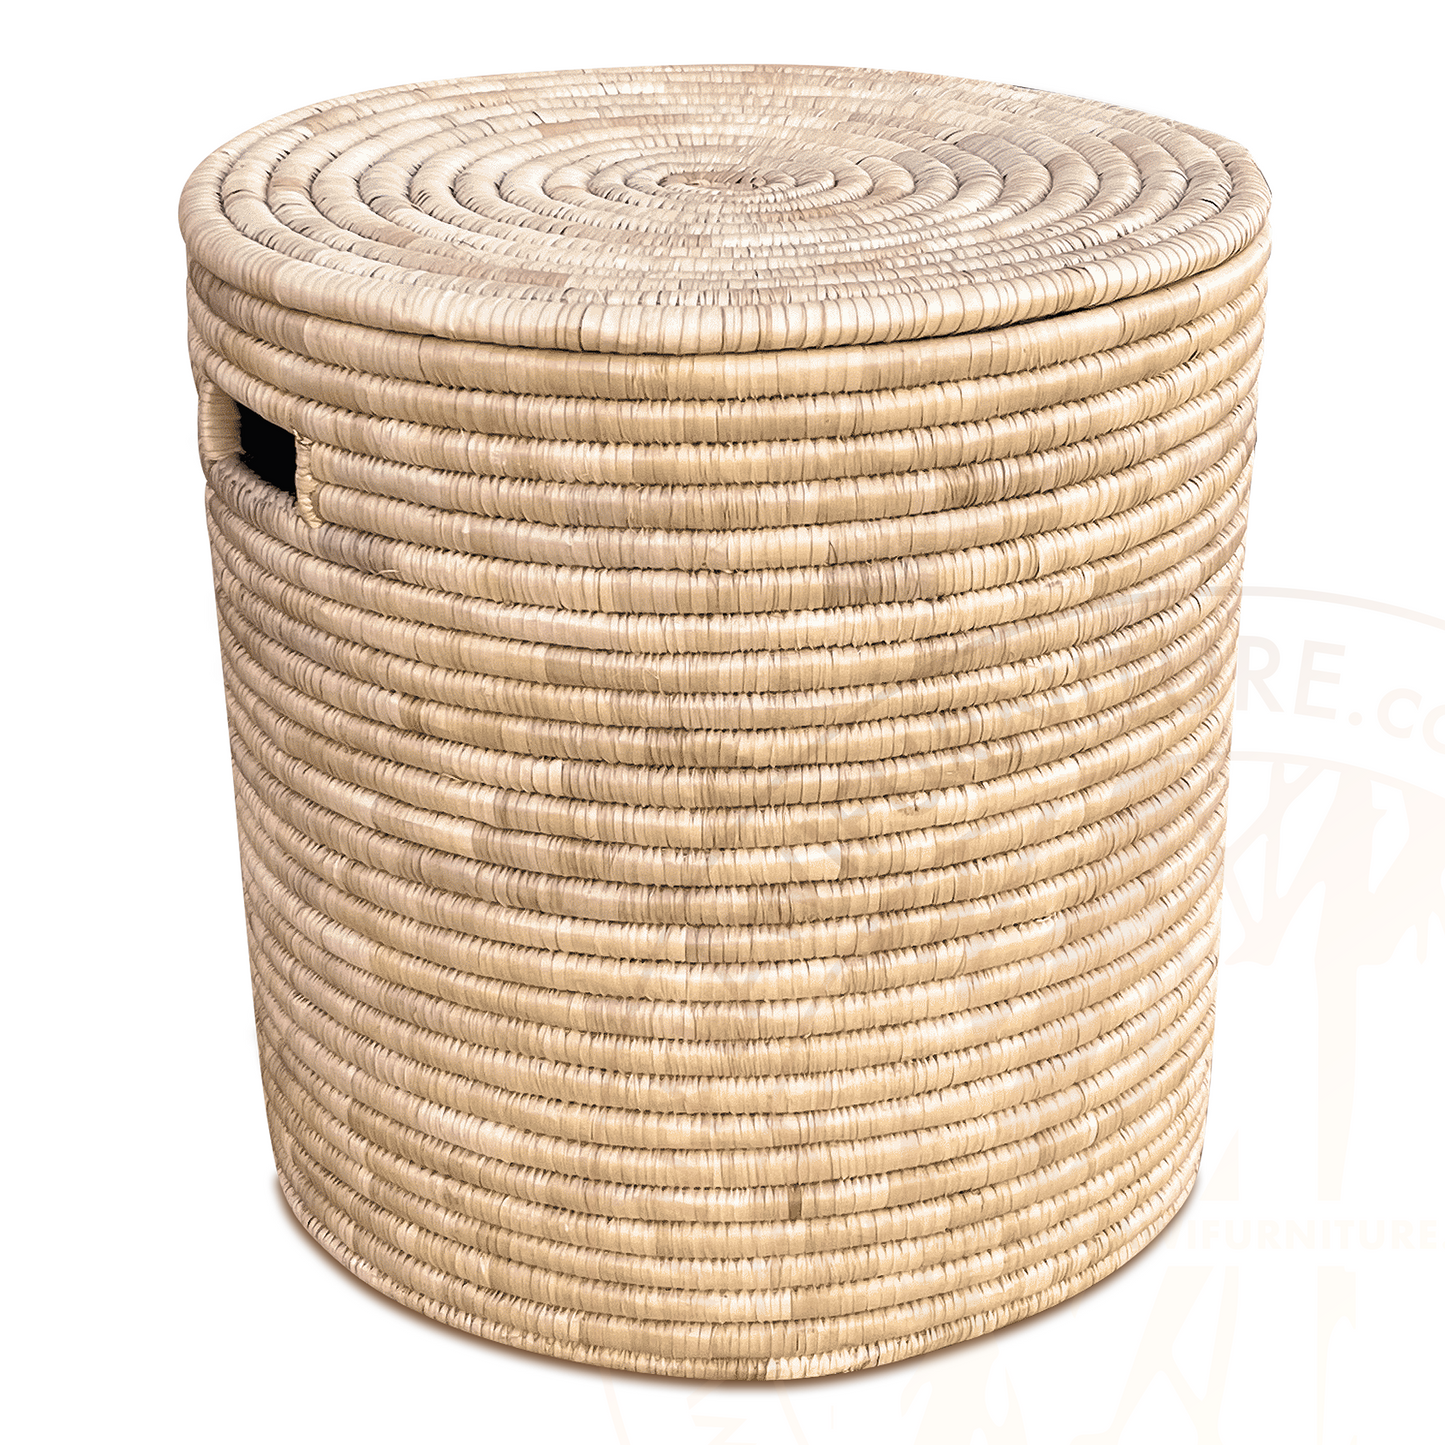 Malawi Laundry Baskets (SET OF 3) Storage Toys Towels Linen Box Weave Woven Basket - Large